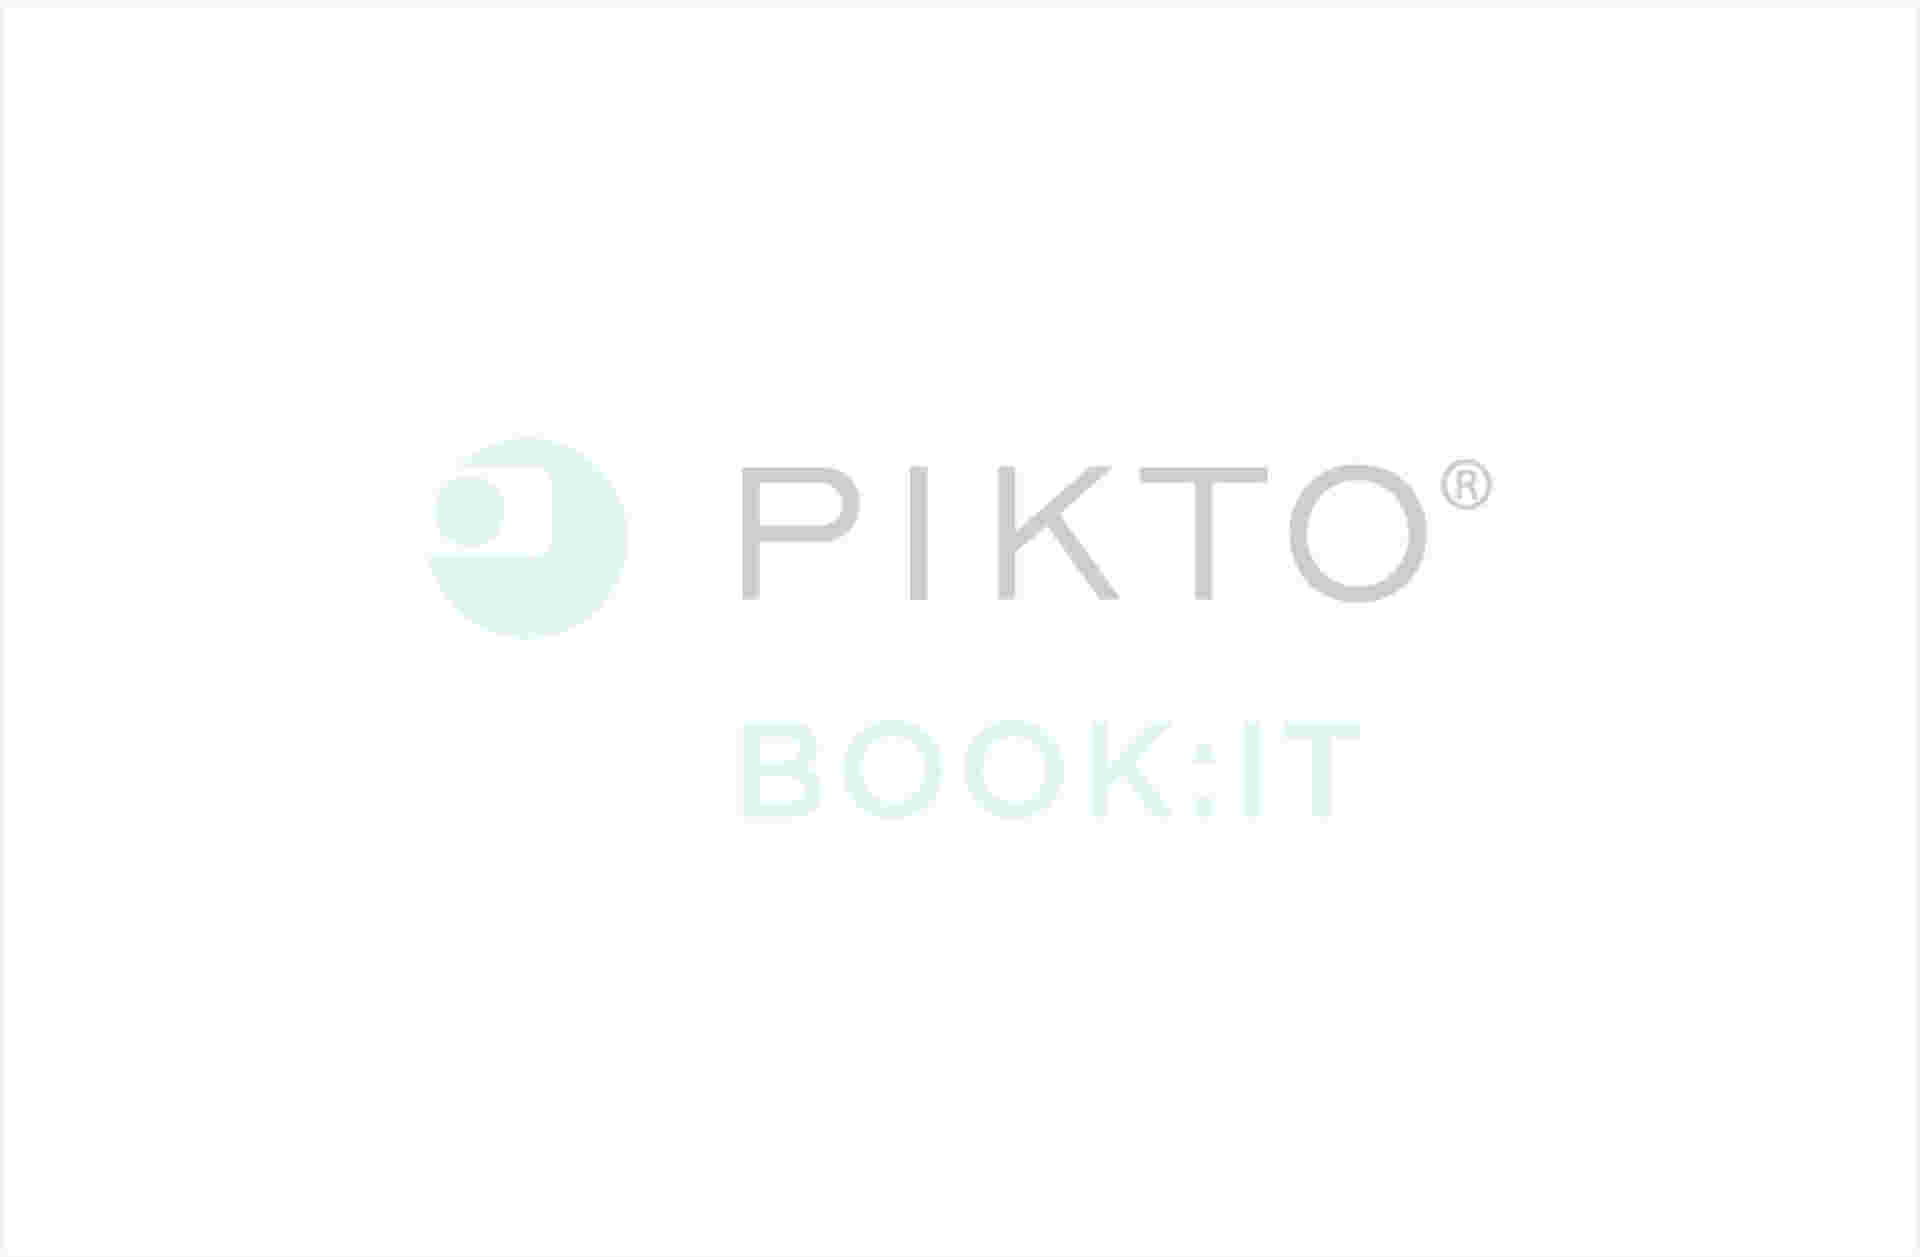 Pikto - Pikto_feature_Smalllogo1_4col